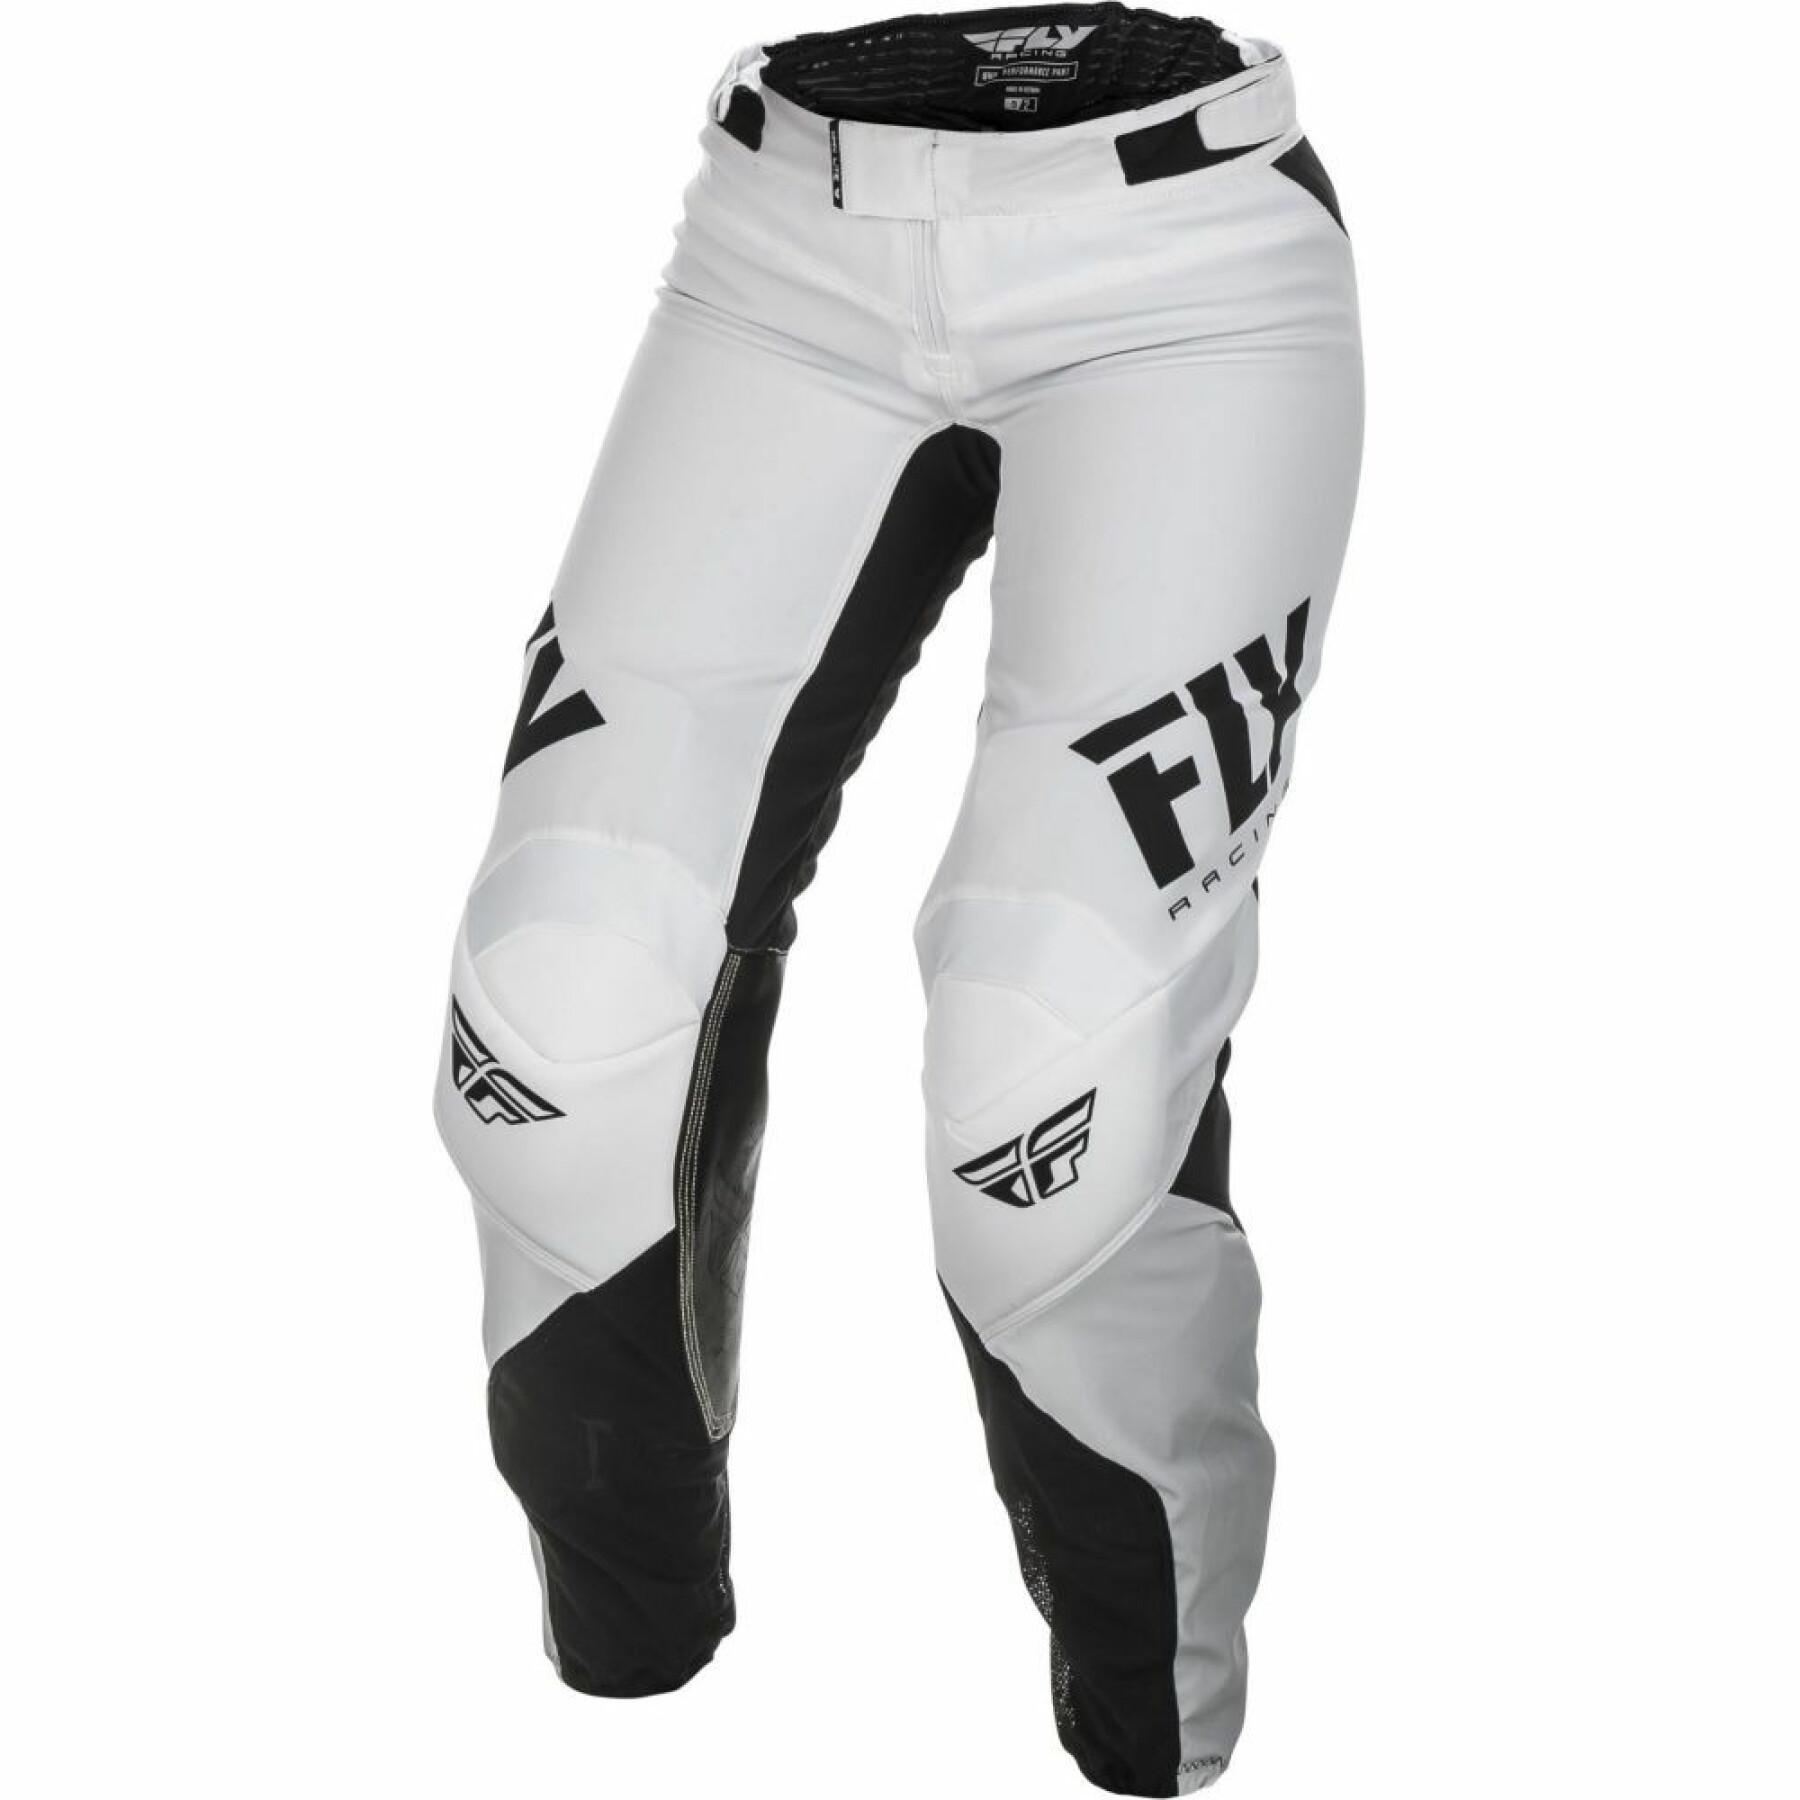 Pantalones de mujer Fly Racing Lite 2019 HP